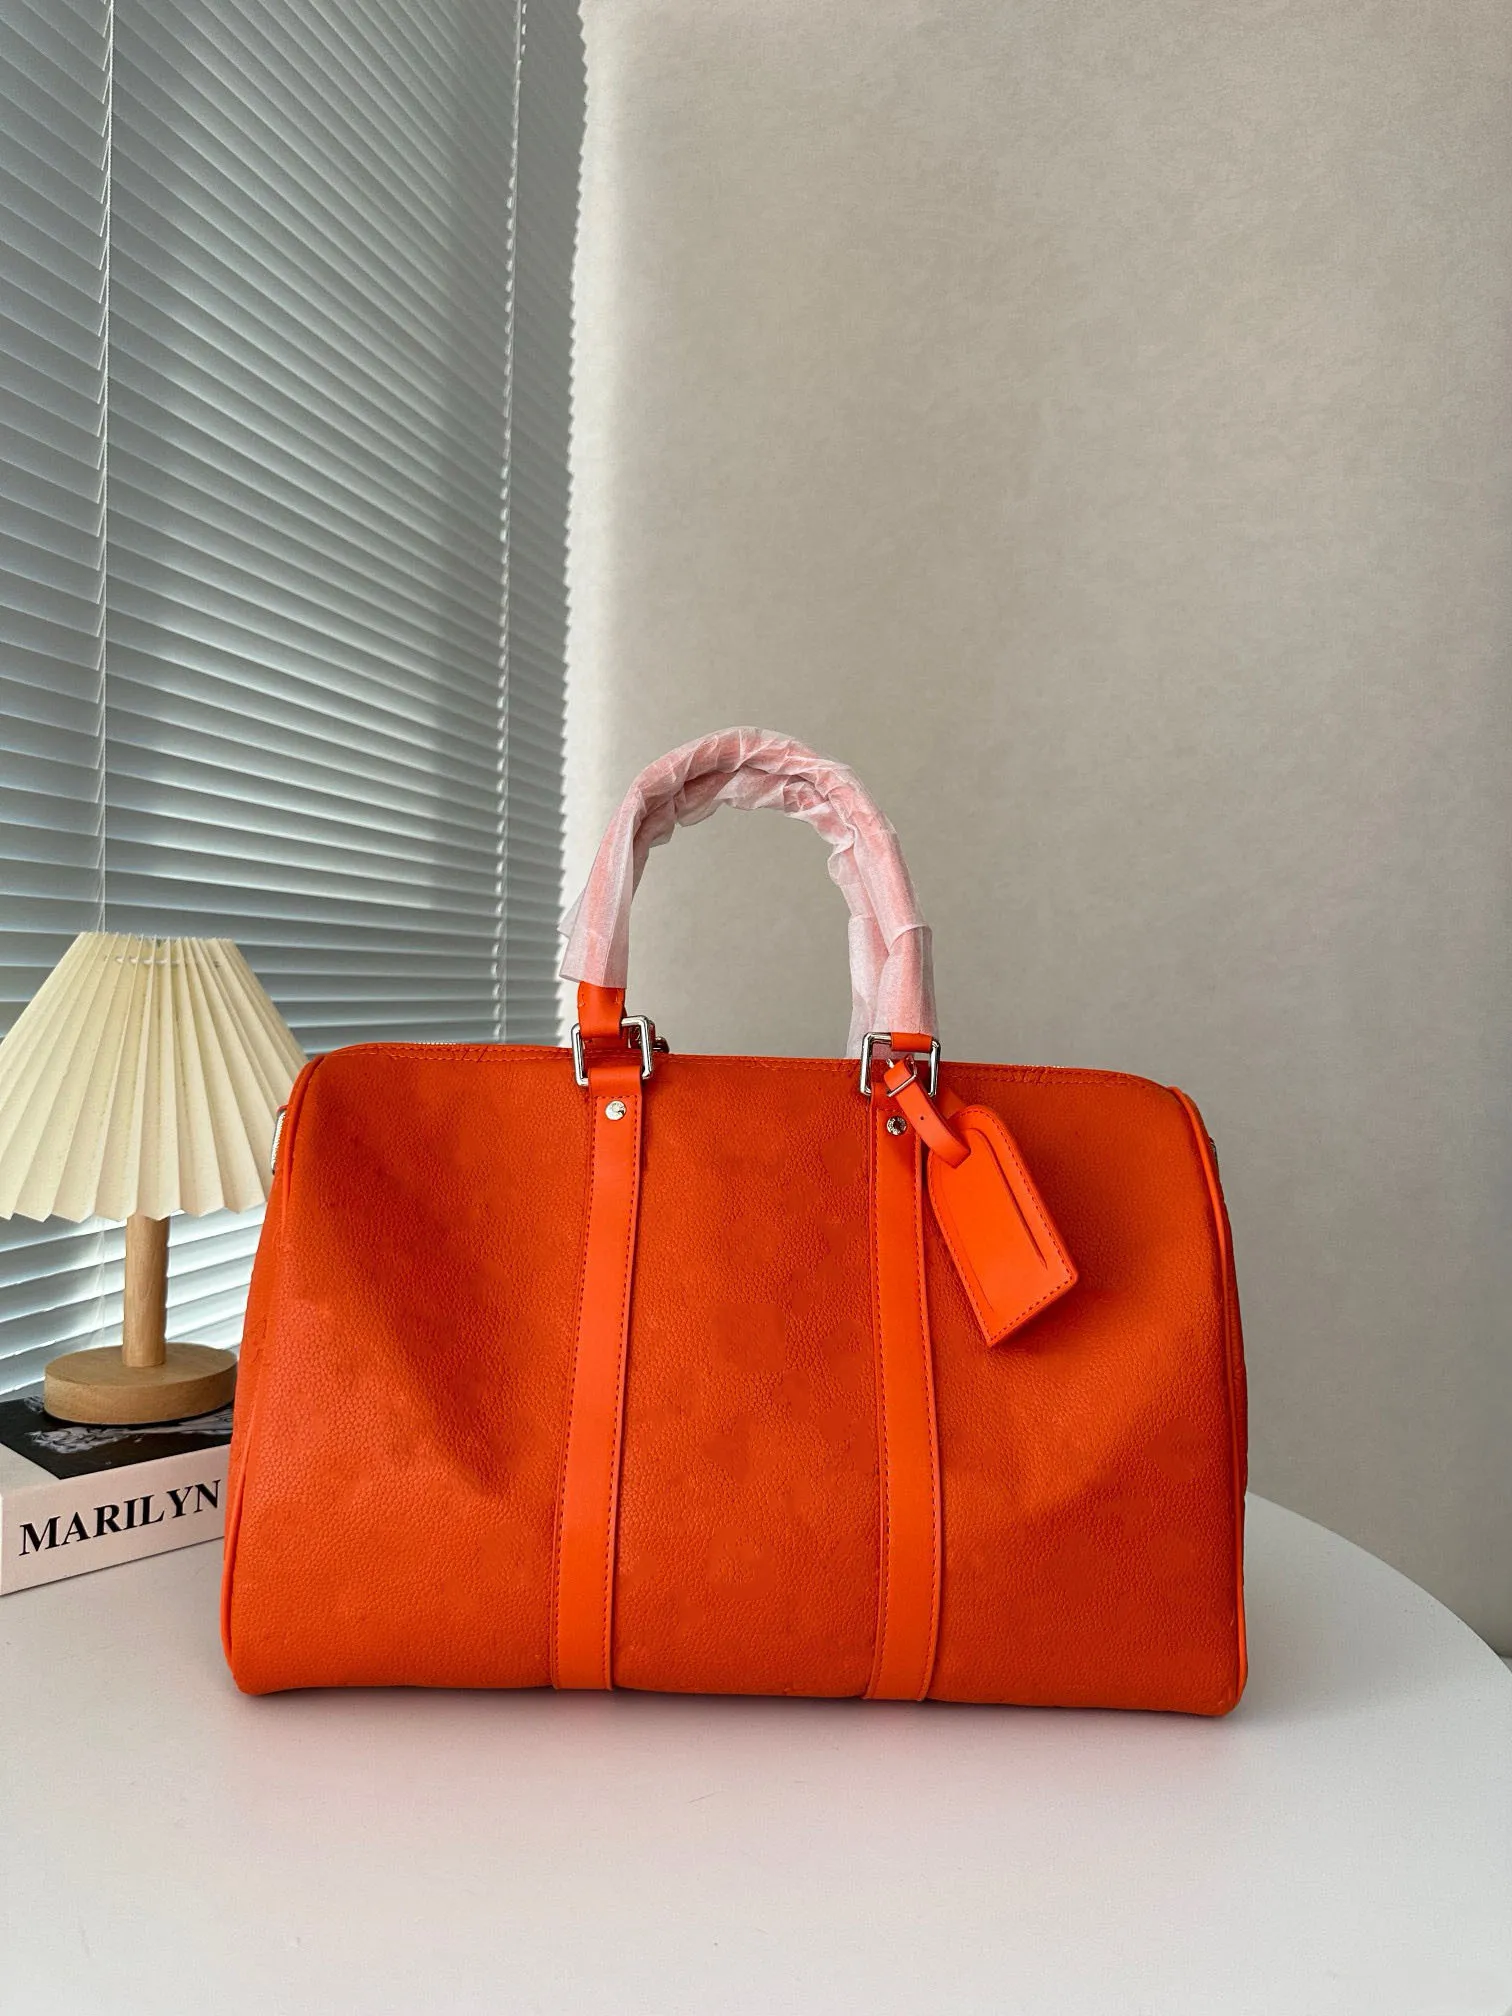 Duffle Bag Designer Crossbody Travel Bag Large Capacity bag with Zip Name Tap and Padlock Flexible Durable Keep All Your Need Perfect Bag for Pleasure Travel